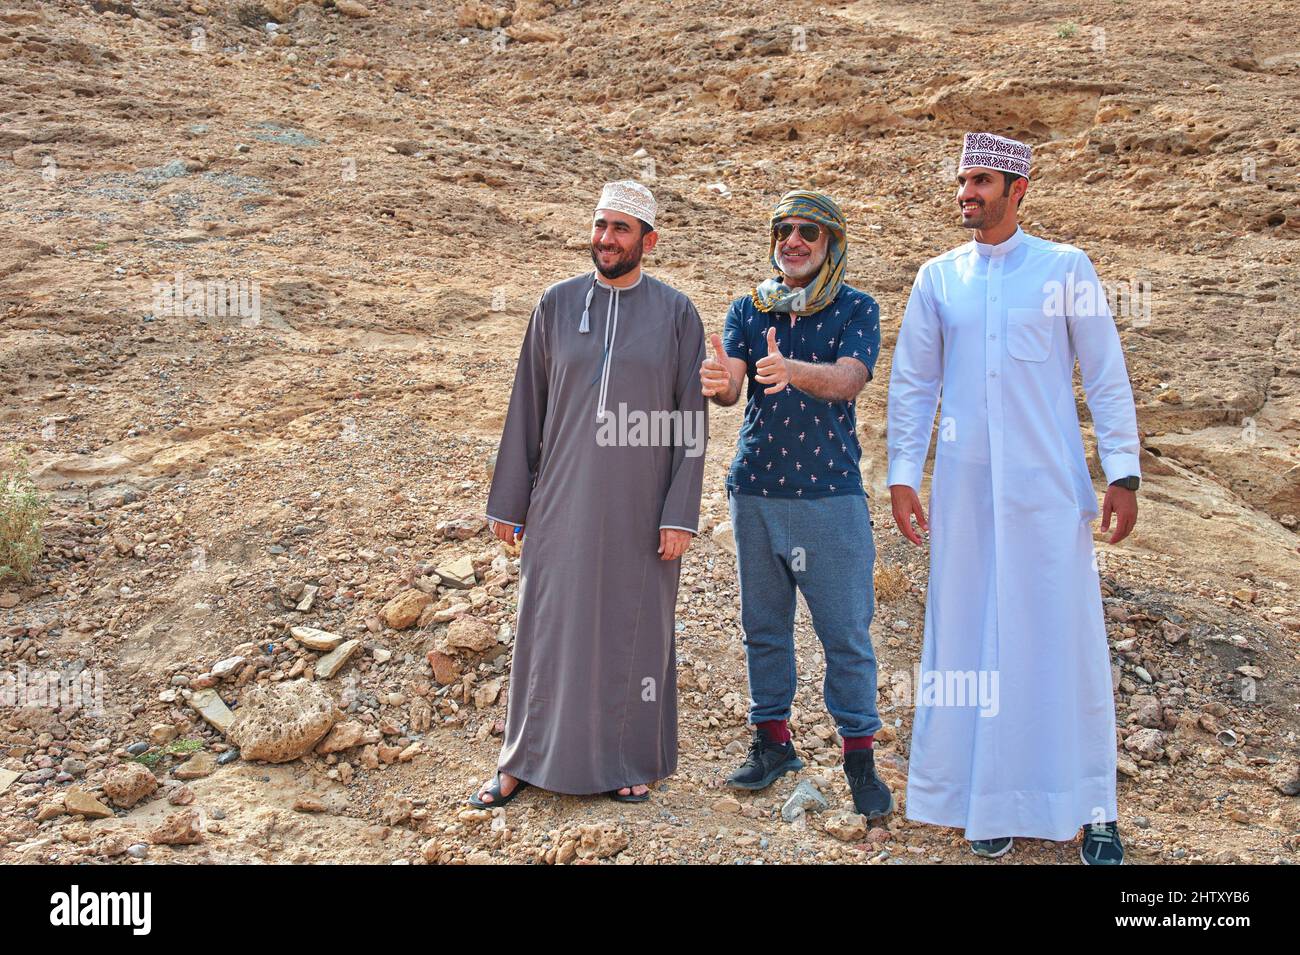 https://c8.alamy.com/comp/2HTXYB6/portrait-of-three-men-in-arabic-clothing-in-the-desert-2HTXYB6.jpg